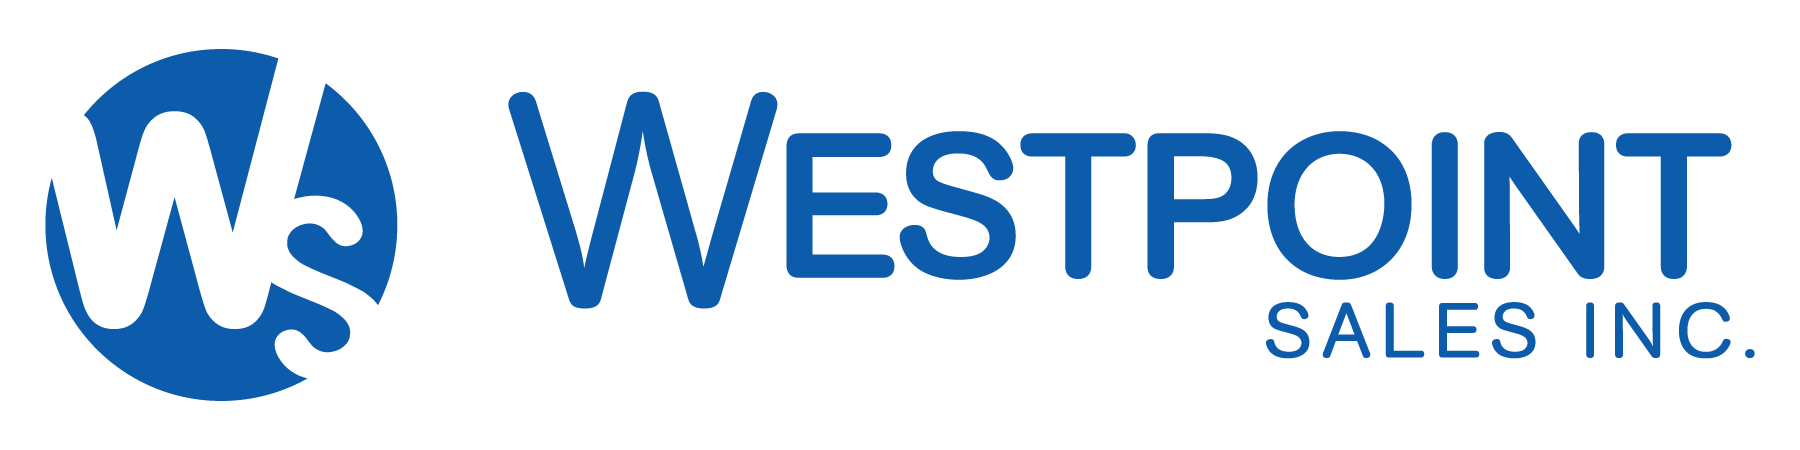 Westpoint_MASTER_WEB.png